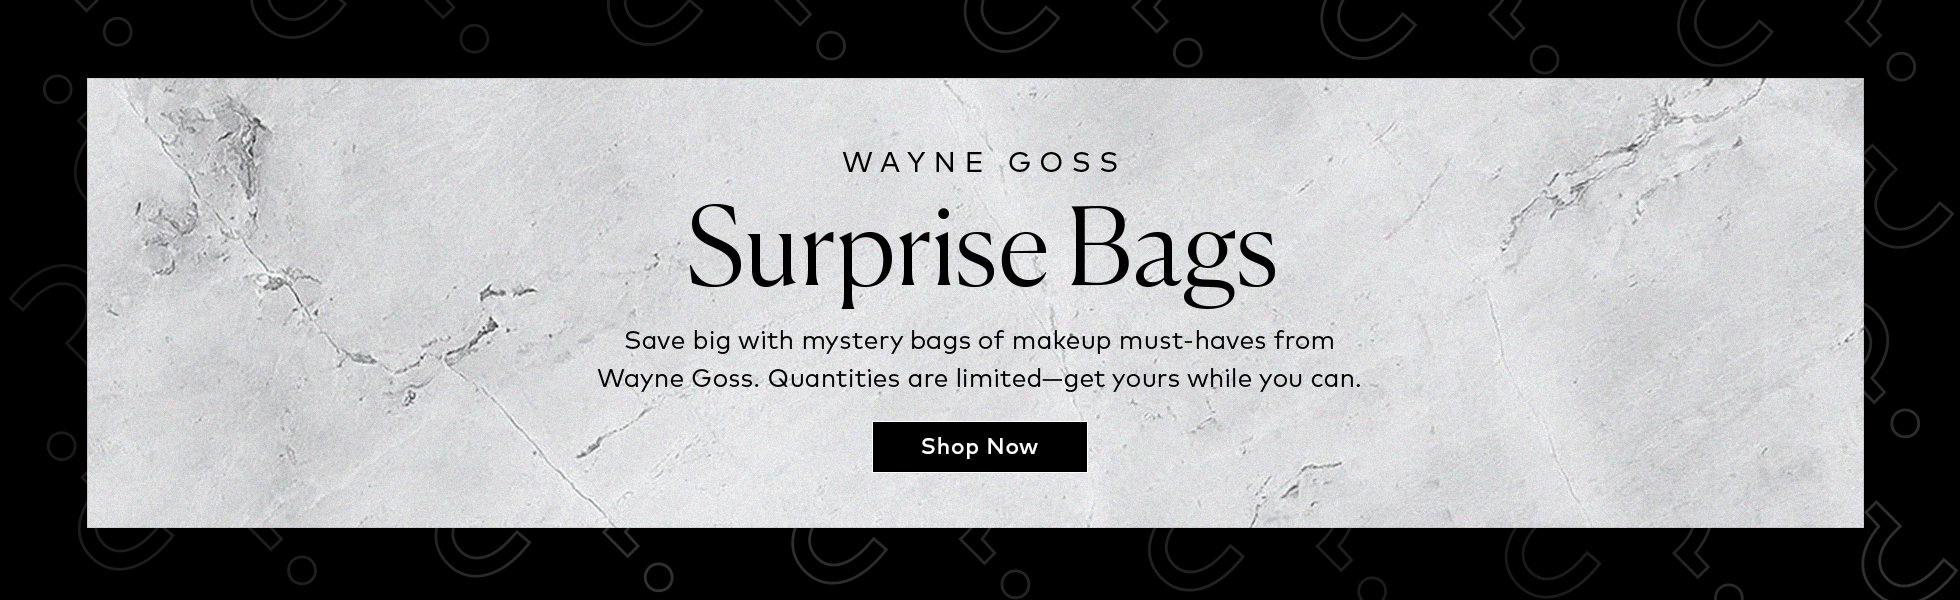 Shop Wayne Goss Surprise Bags on Beautylish.com